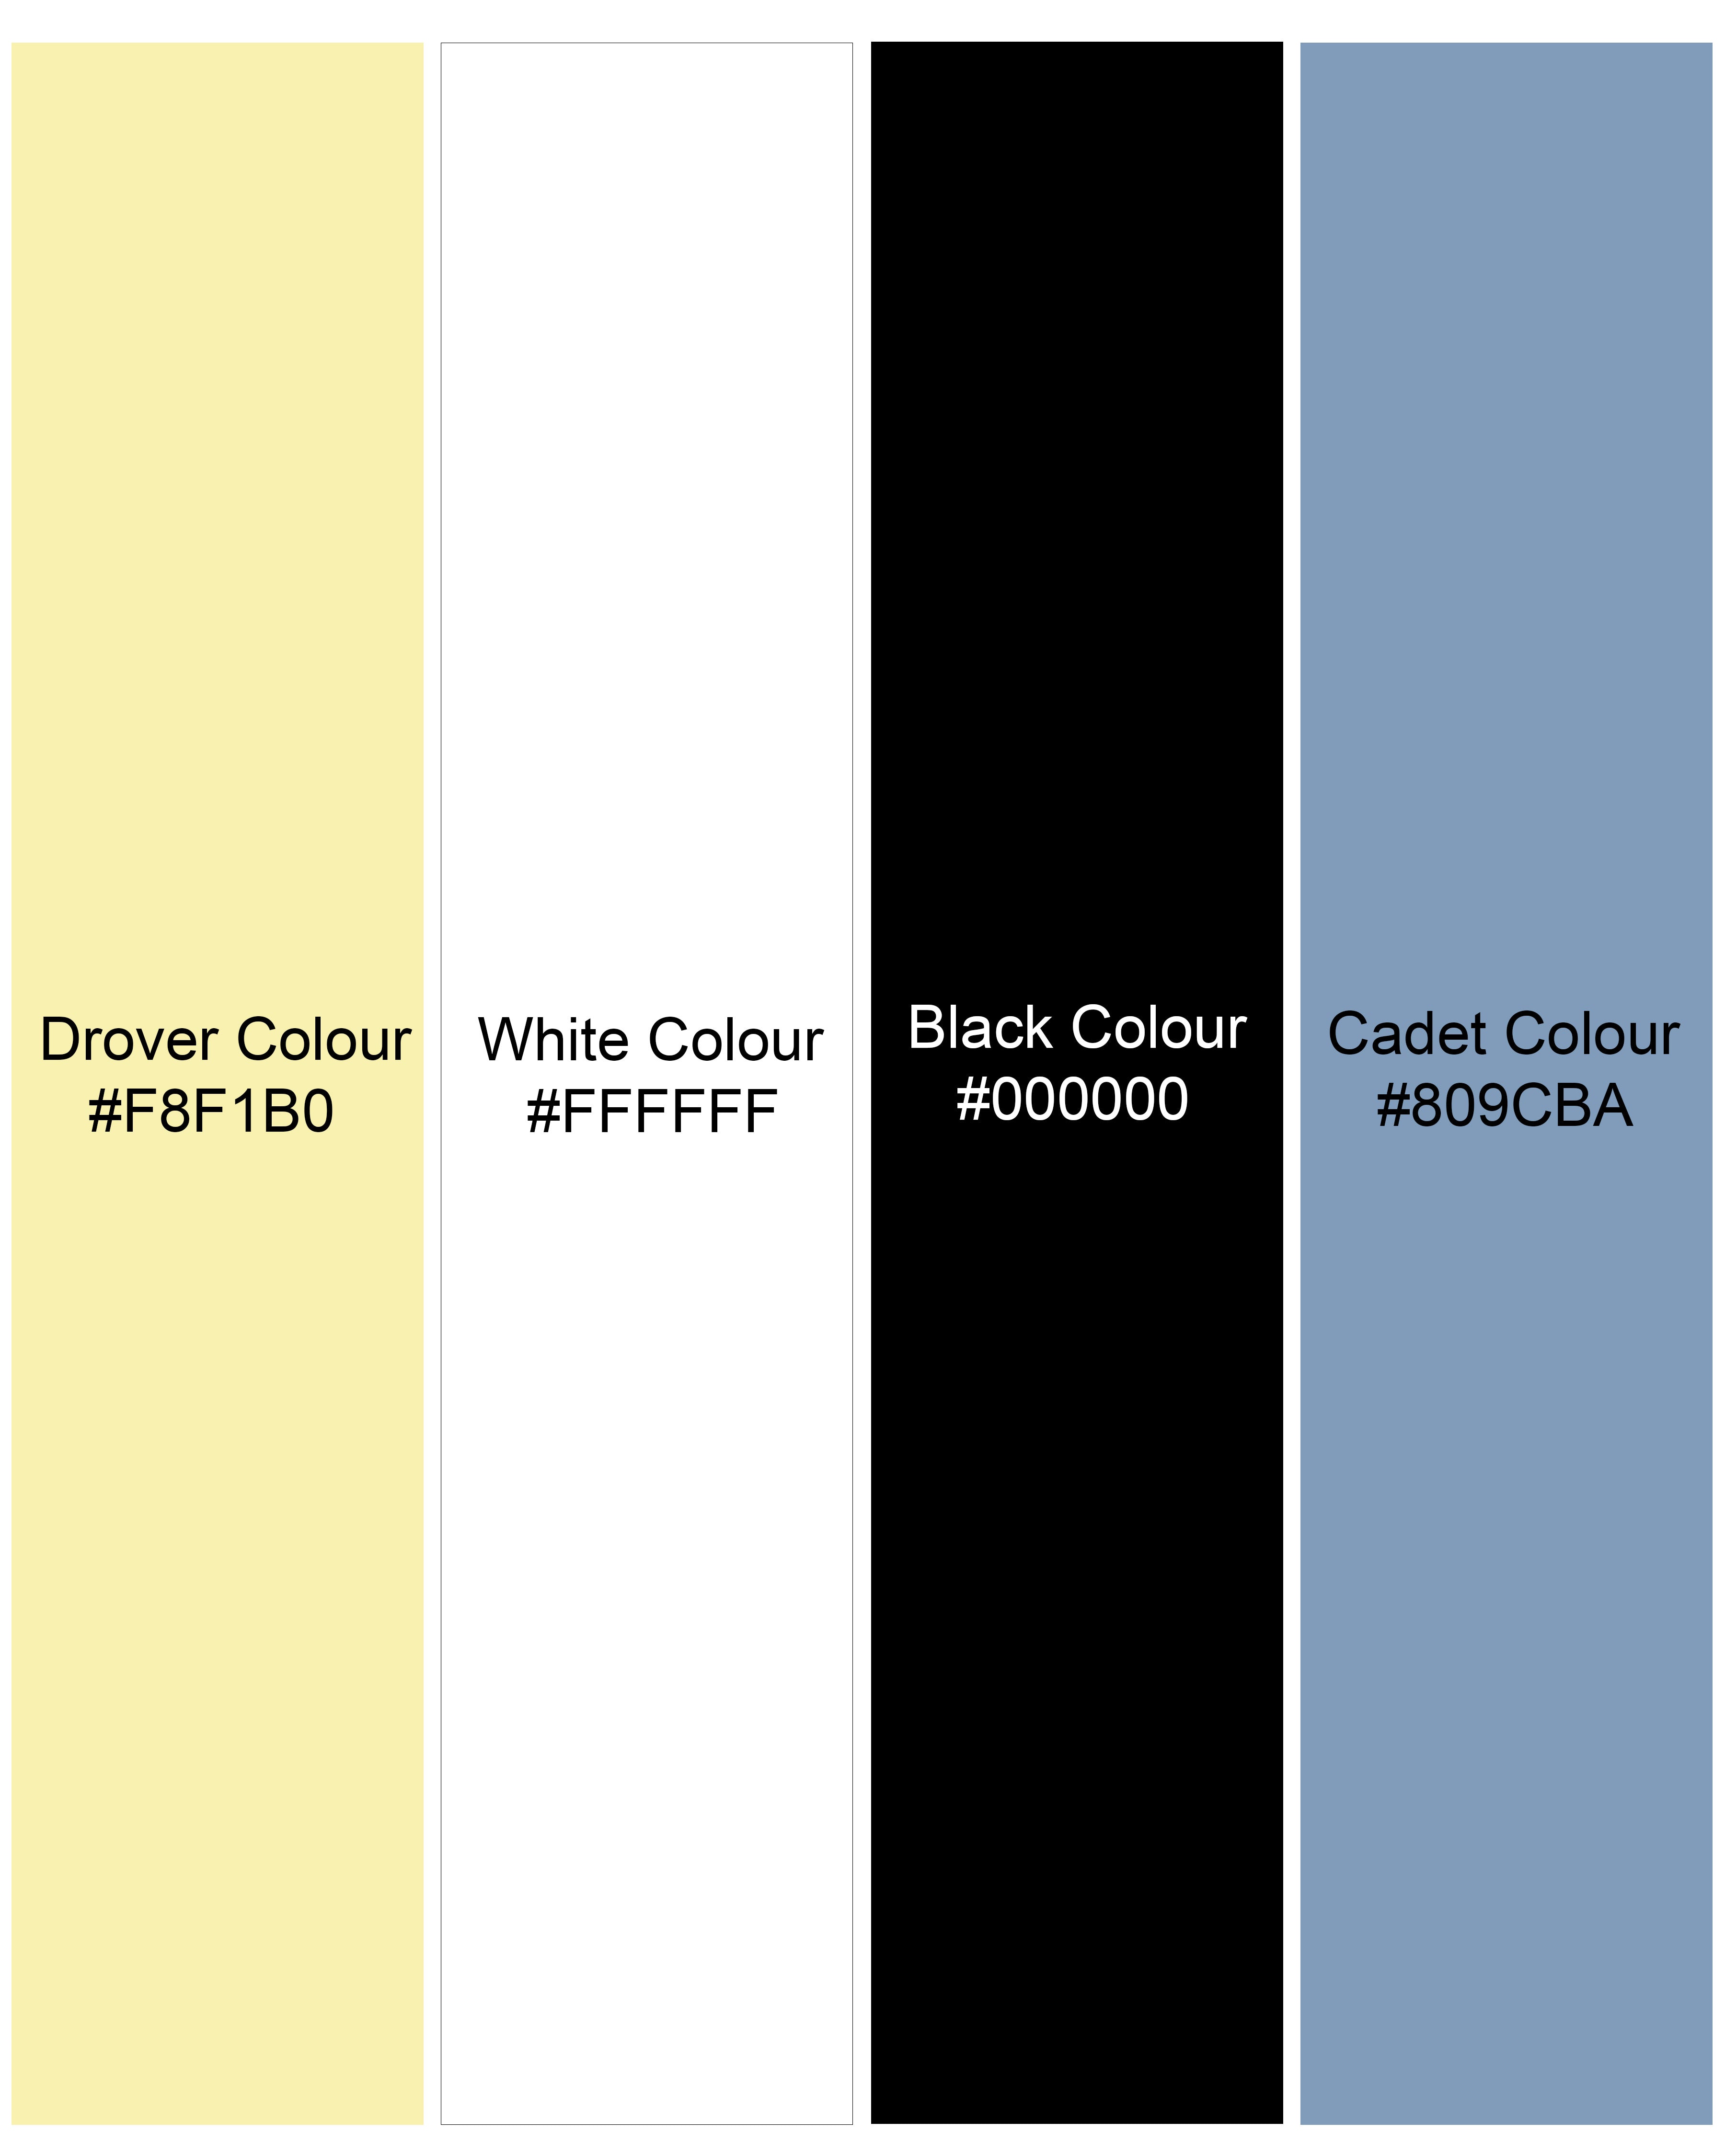 Drover Yellow and White Windowpane with Dog Rubber Printed Premium Tencel Designer Shirt 7612-M-RPRT-E074-38, 7612-M-RPRT-E074-H-38, 7612-M-RPRT-E074-39, 7612-M-RPRT-E074-H-39, 7612-M-RPRT-E074-40, 7612-M-RPRT-E074-H-40, 7612-M-RPRT-E074-42, 7612-M-RPRT-E074-H-42, 7612-M-RPRT-E074-44, 7612-M-RPRT-E074-H-44, 7612-M-RPRT-E074-46, 7612-M-RPRT-E074-H-46, 7612-M-RPRT-E074-48, 7612-M-RPRT-E074-H-48, 7612-M-RPRT-E074-50, 7612-M-RPRT-E074-H-50, 7612-M-RPRT-E074-52, 7612-M-RPRT-E074-H-52